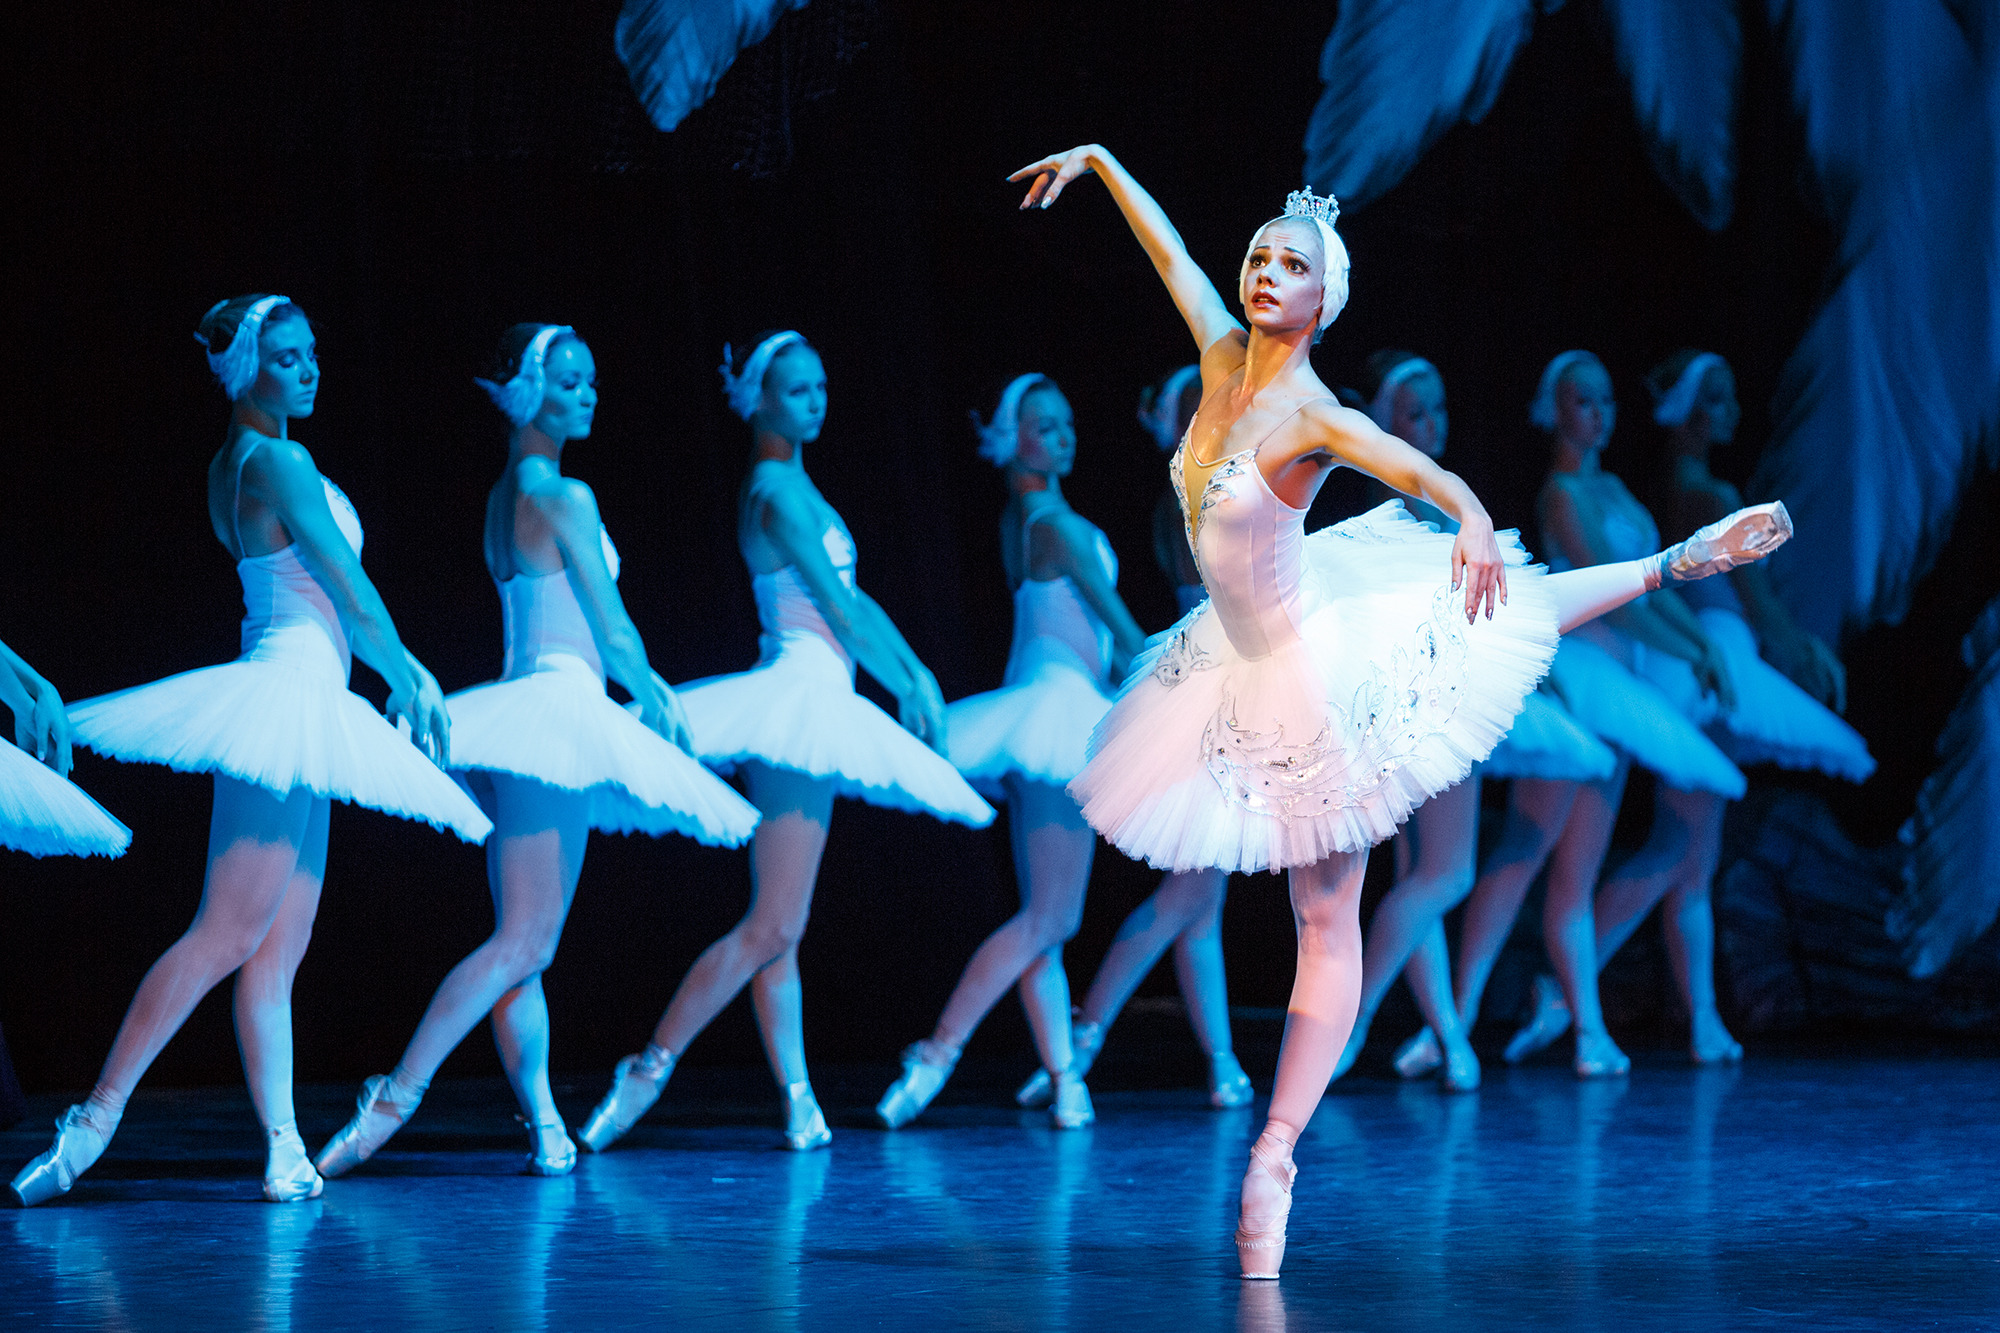 На фото - сцена из балета "Лебединое озеро" Марийского театра оперы и балета. © Пресс-служба театра.